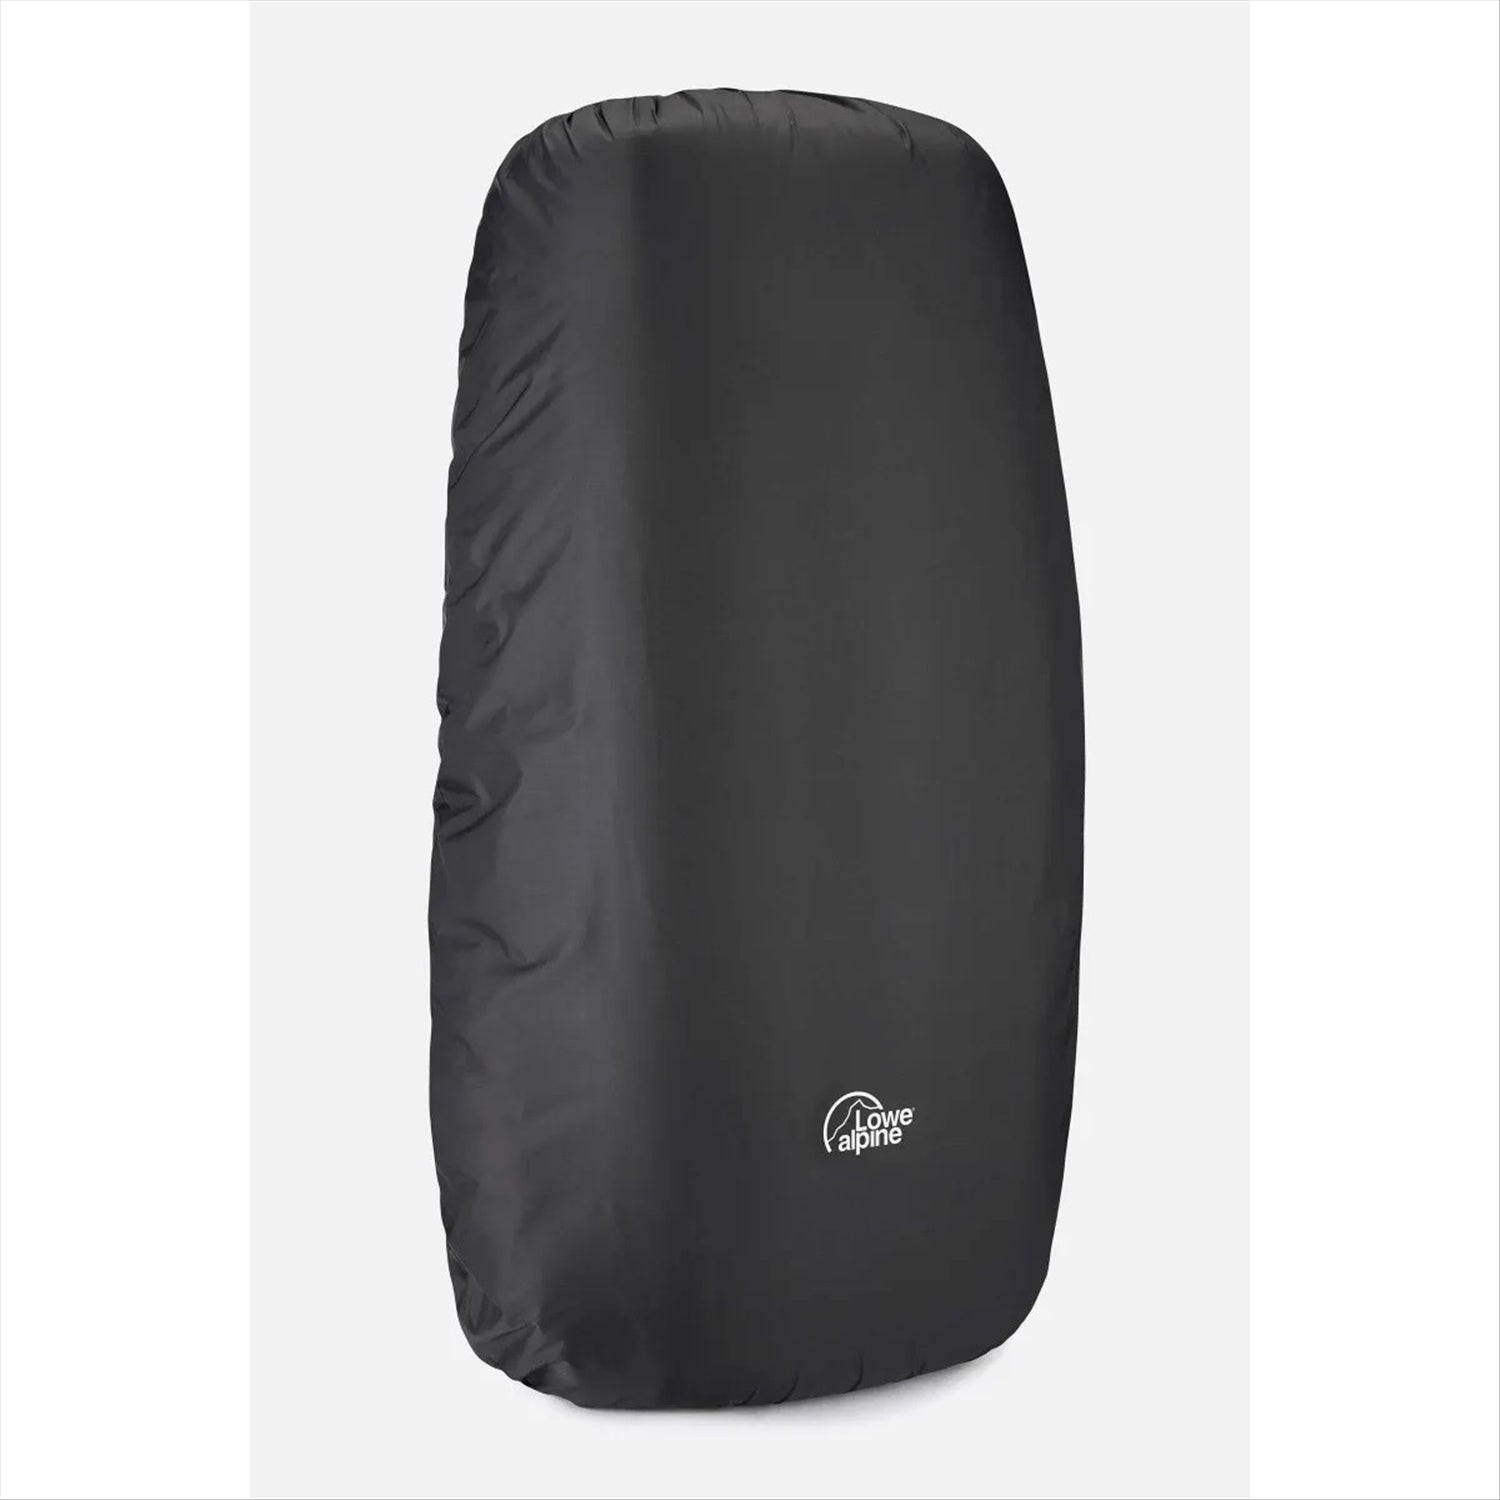 Lowe Alpine Pack Raincover with Storage Bag Black